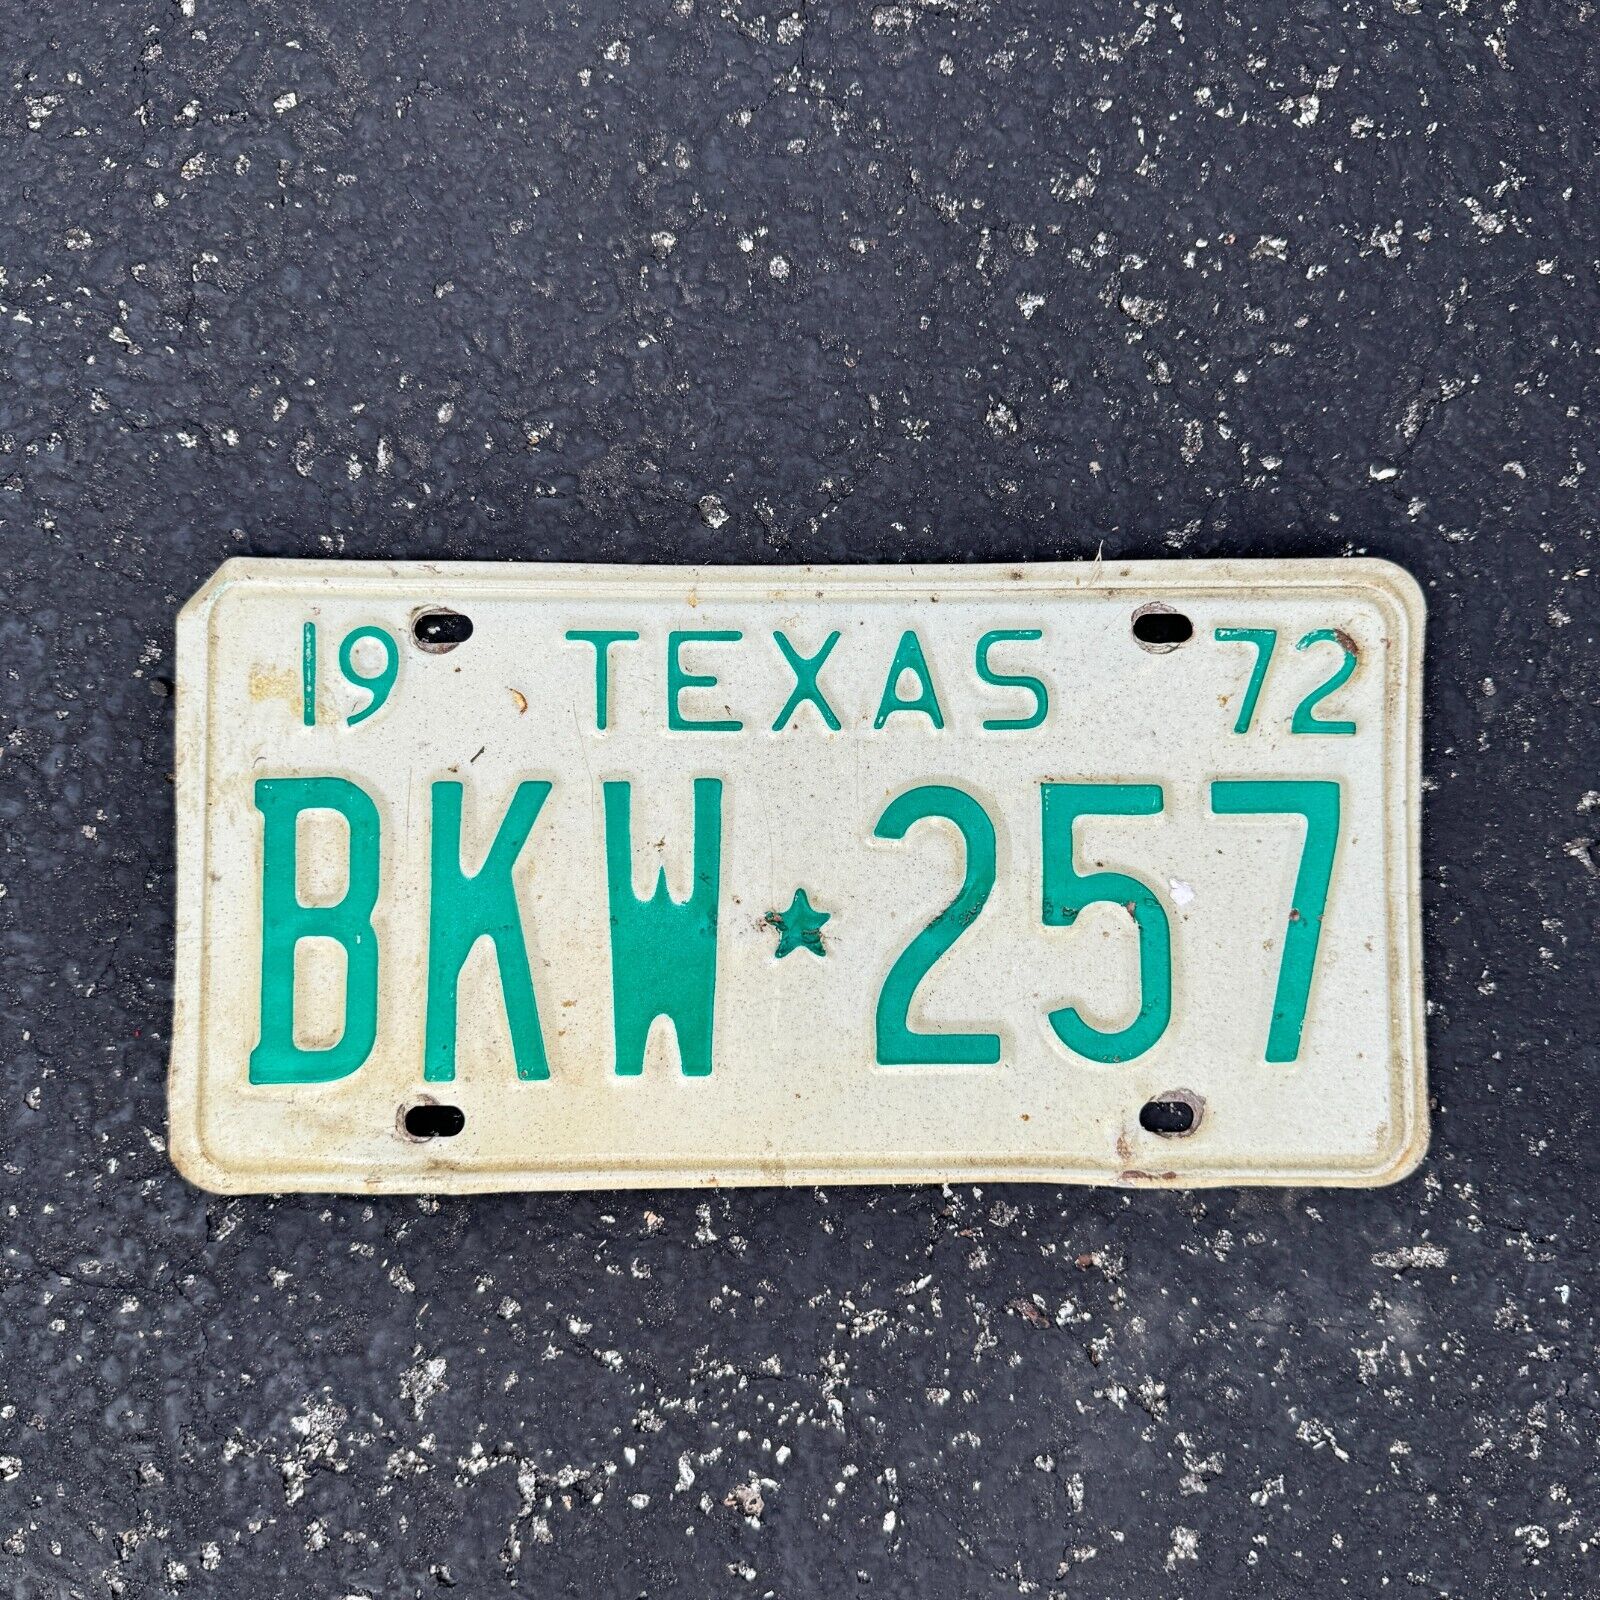 1972 Texas License Plate Vintage Auto Tag Garage Wall Decor BKW 257